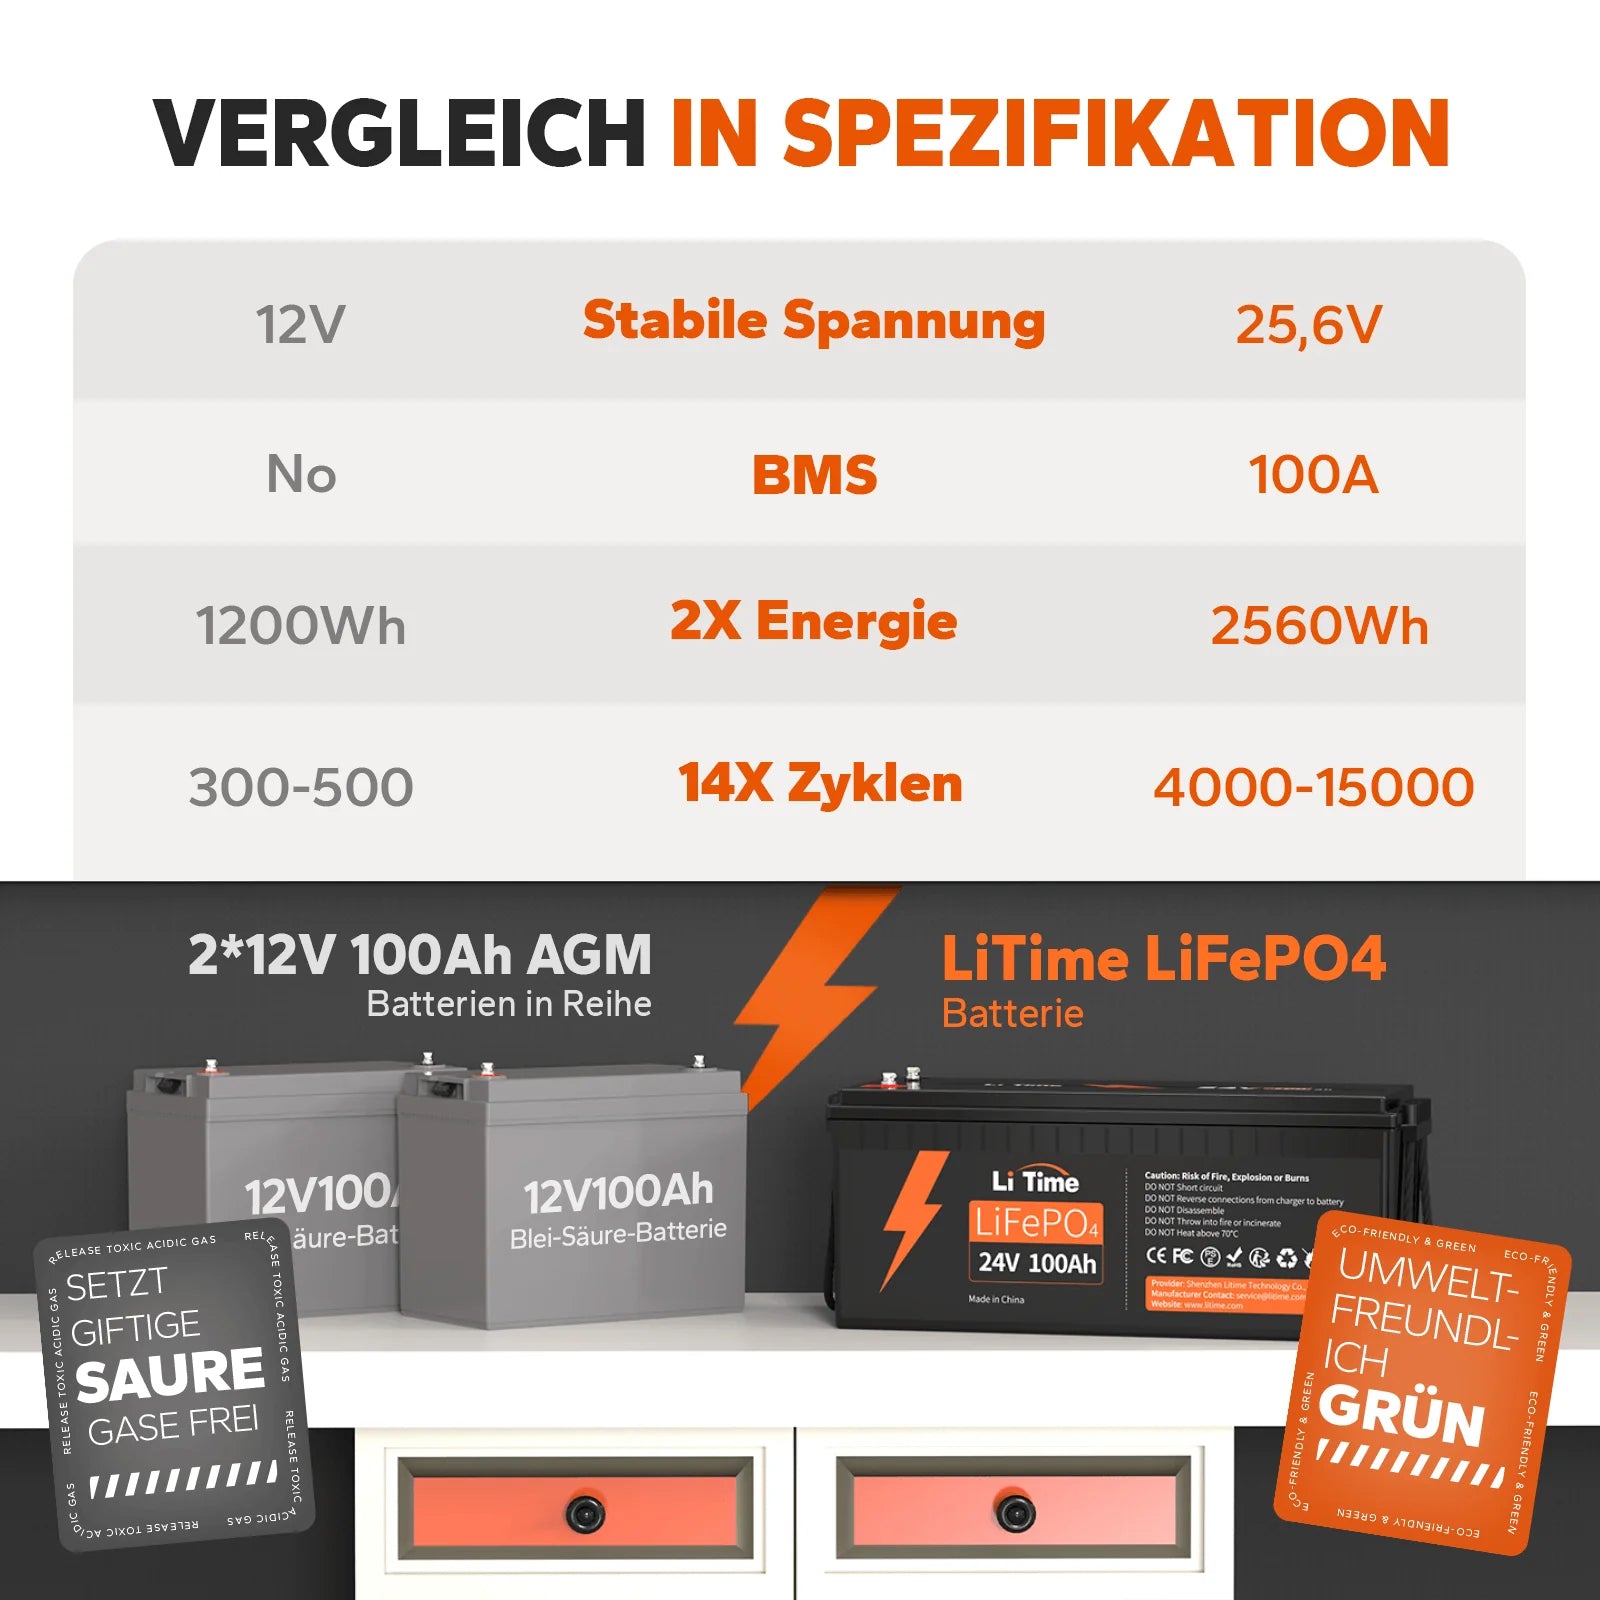 【0% MwSt. Austria & Germany】24V 100Ah LiFePO4 Batterie hat max. 2560Wh Energie, die sogar die 2400Wh Energie von 4 12V 100Ah AGM Batterien (24V 100Ah Batteriesystem in 2P2R Konfiguration) übertrifft.